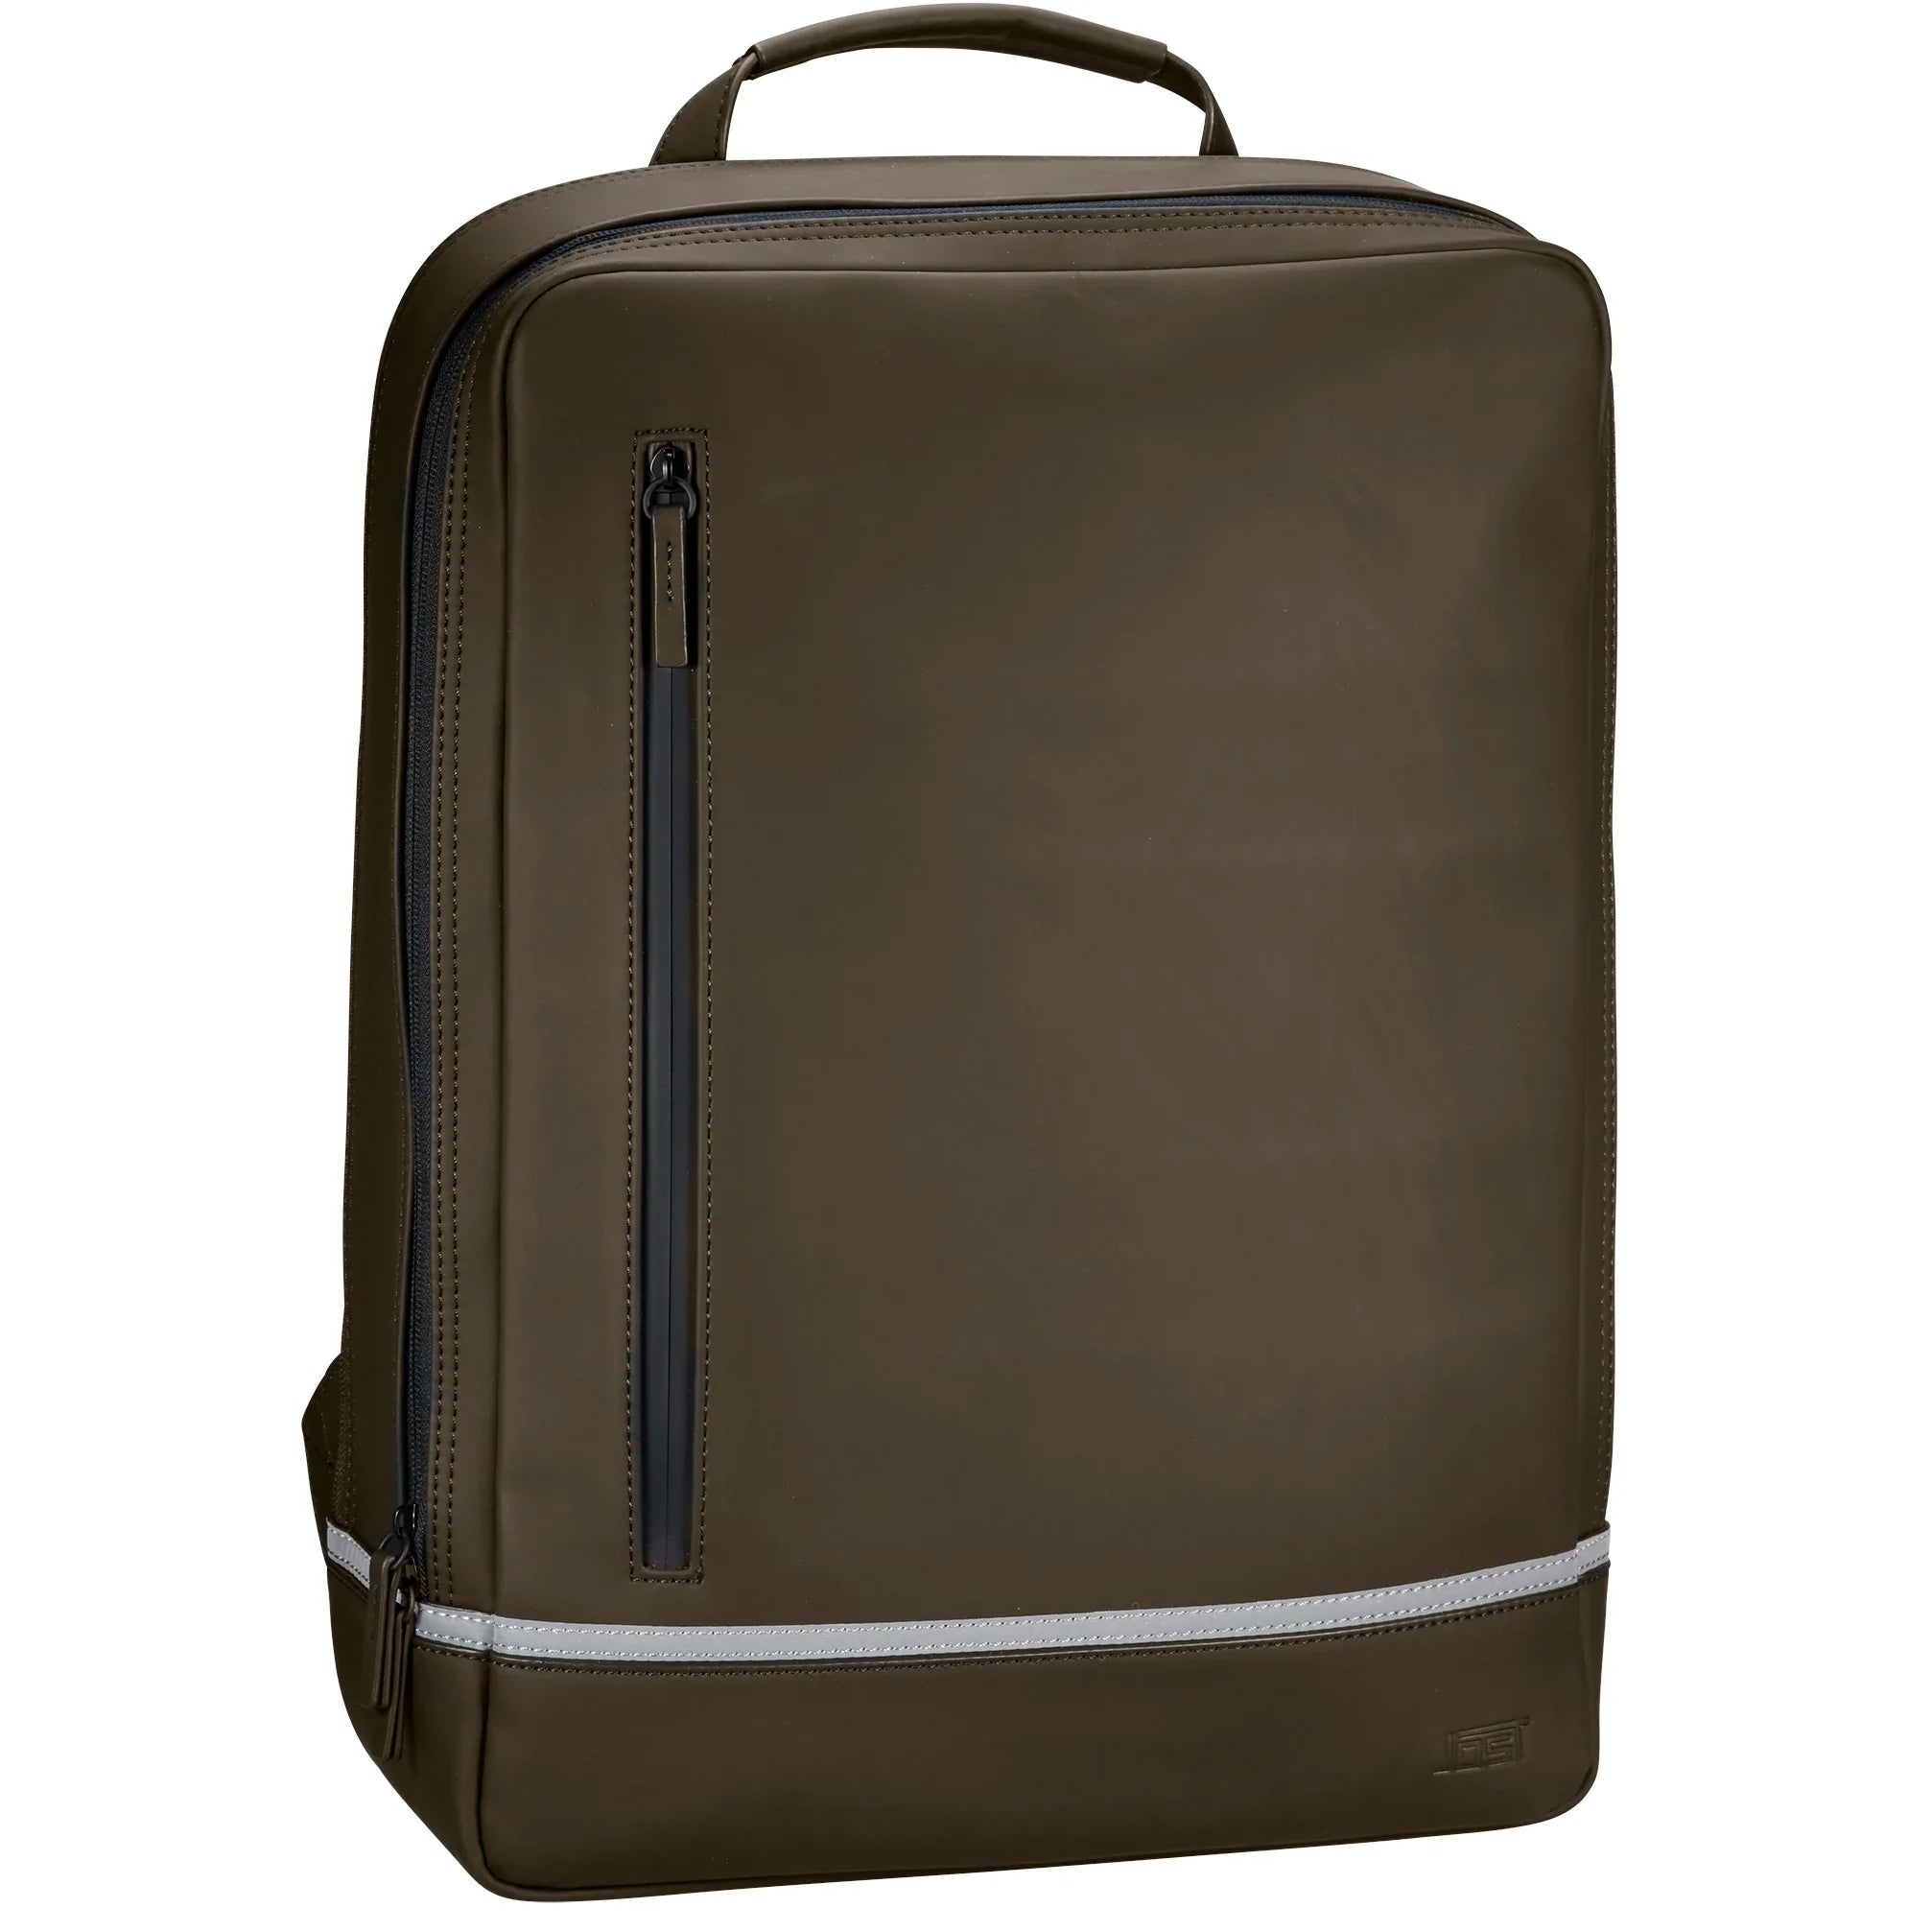 Jost Backpackspecial Daypack Freizeitrucksack 44 cm - Olive